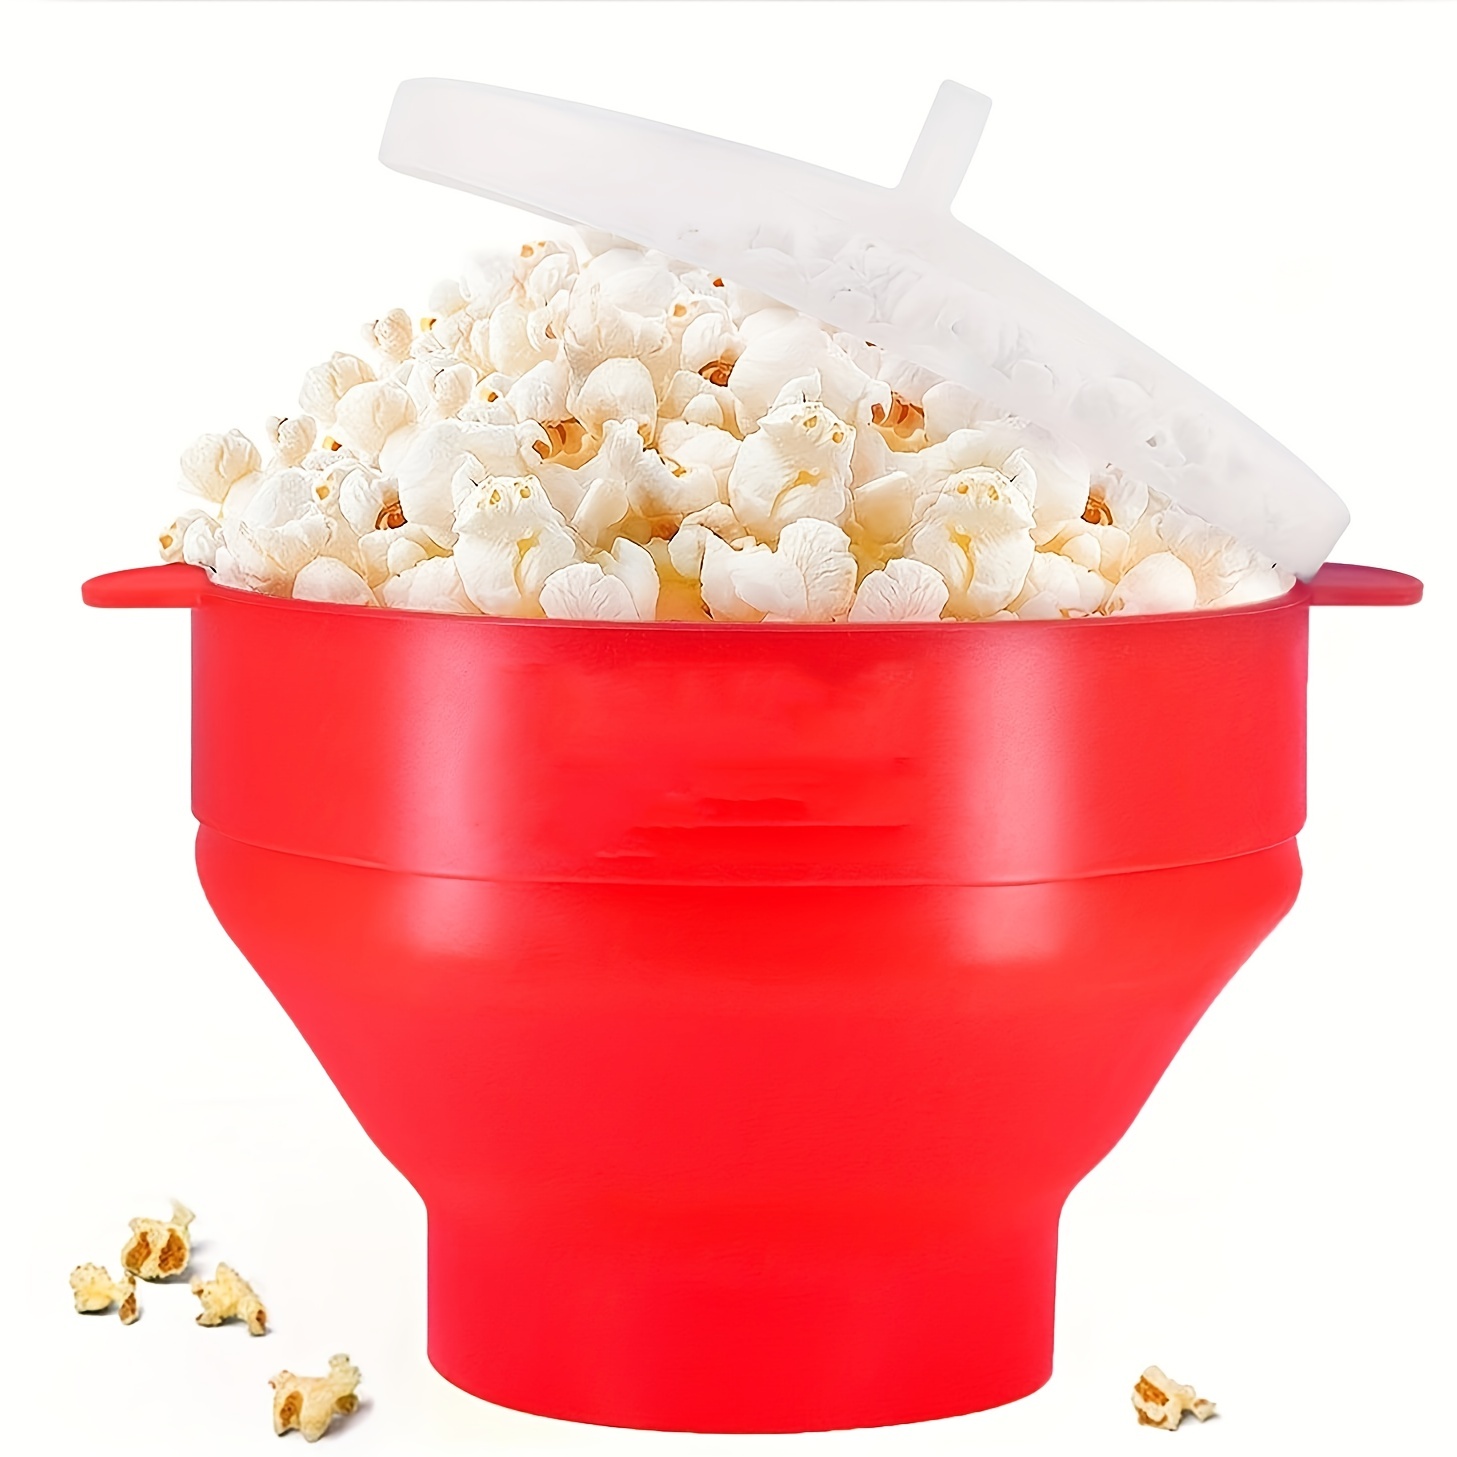 Tasty 3qt Family Size Microwave Popcorn Popper, Dishwasher Safe, Red, Size: 3 qt